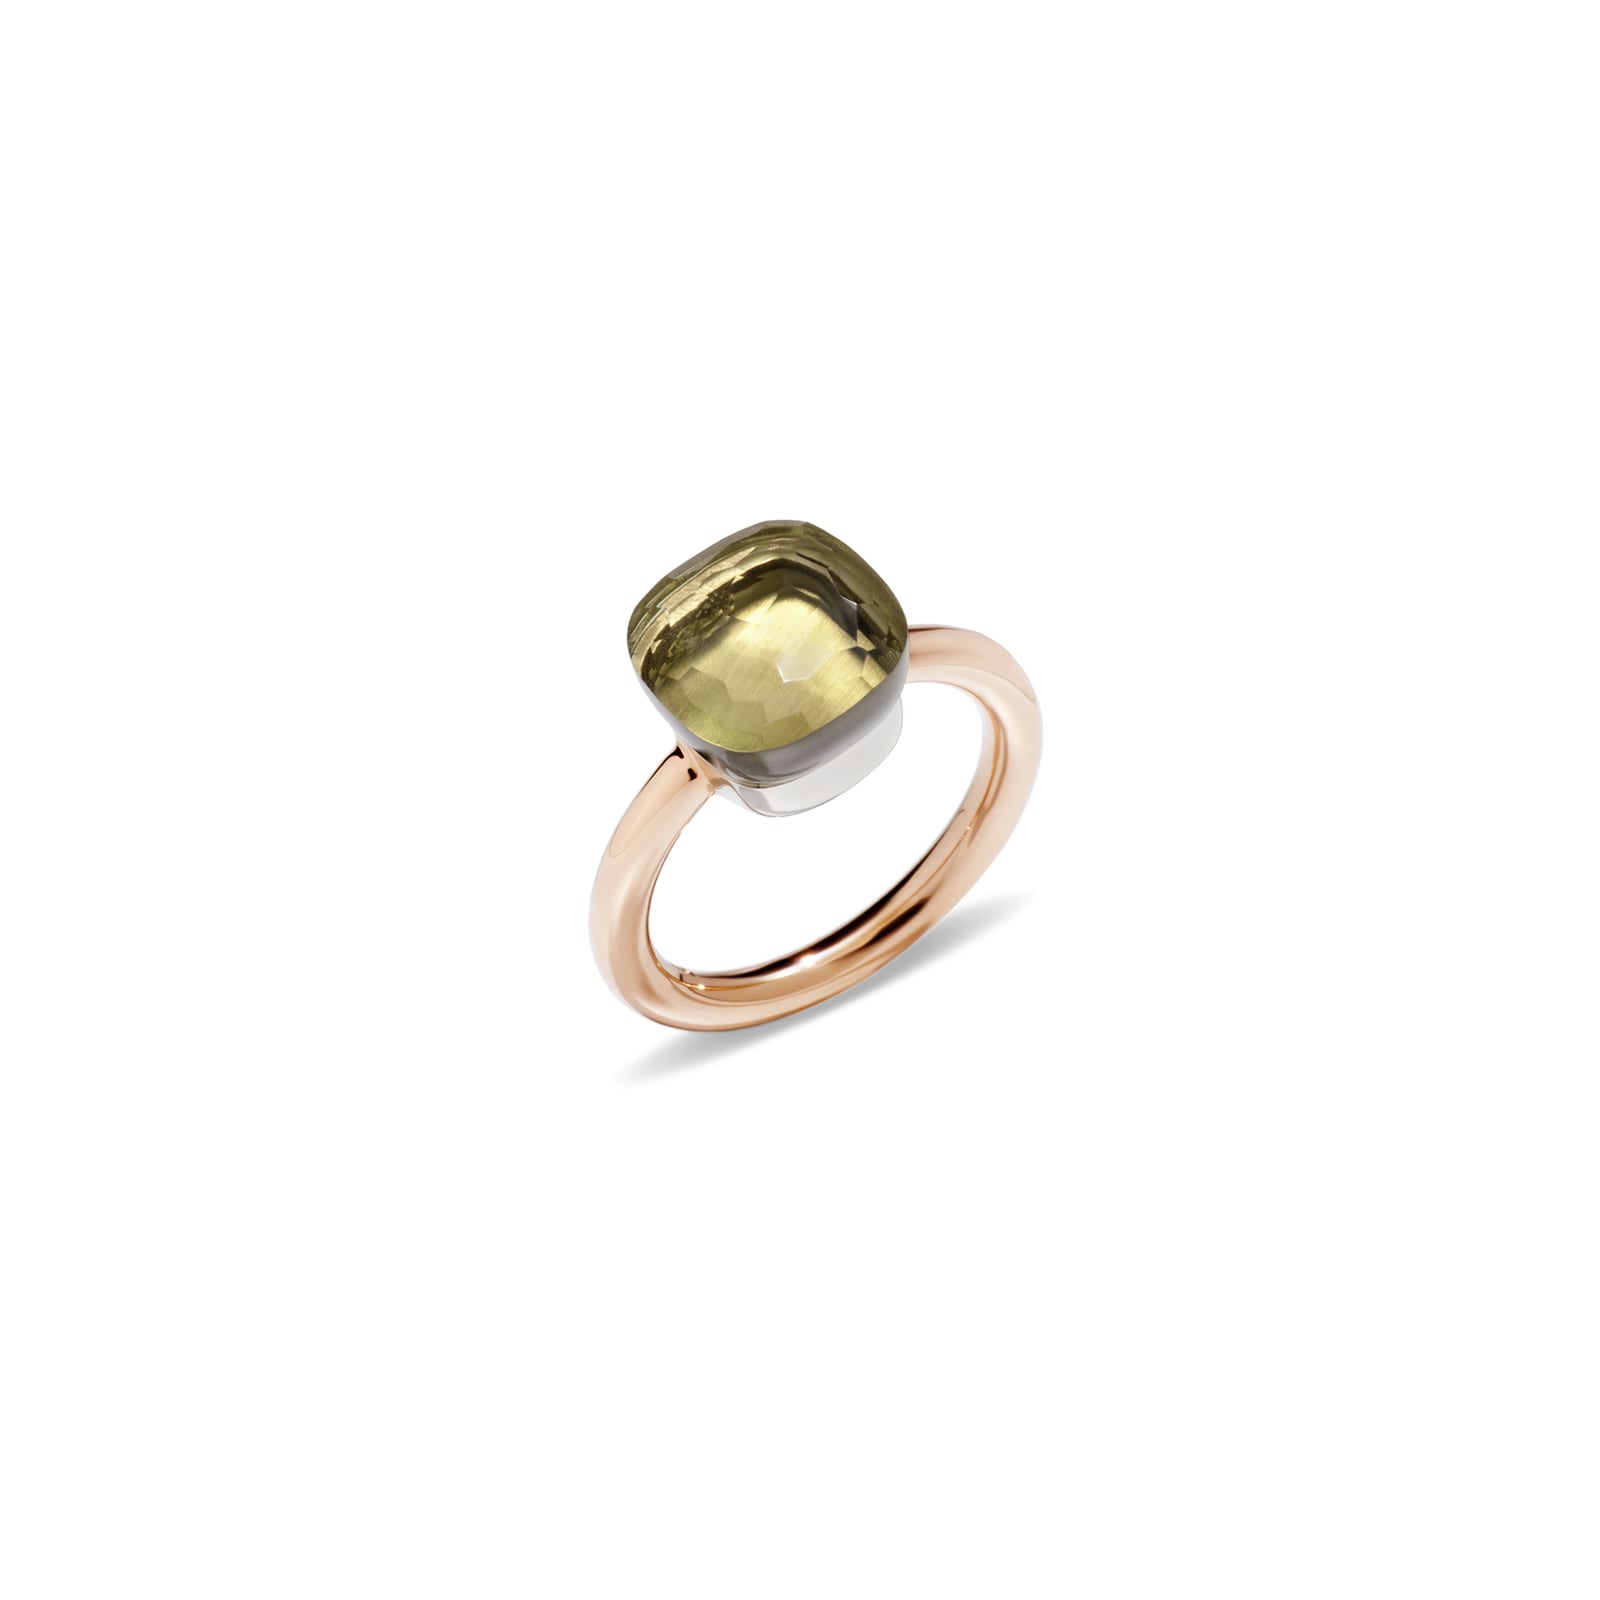 Nudo 18ct Rose & White Gold Lemon Quartz Ring - Ring Size O